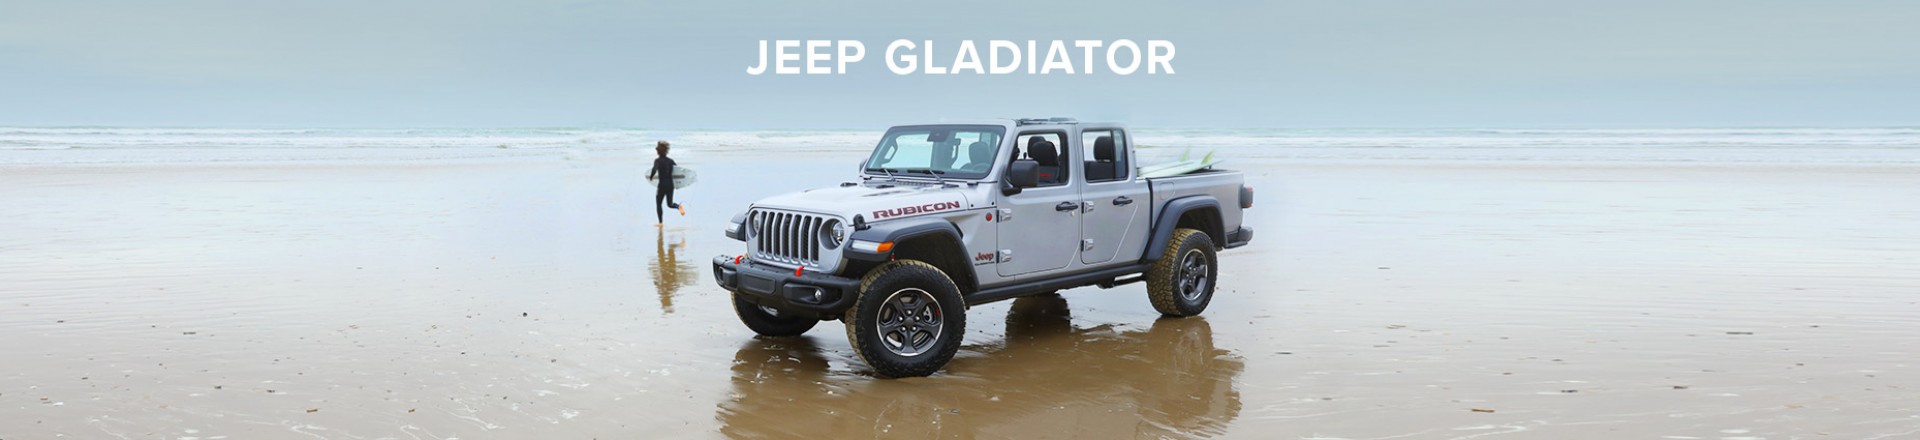 Jeep Gladiator Rubicon Surf